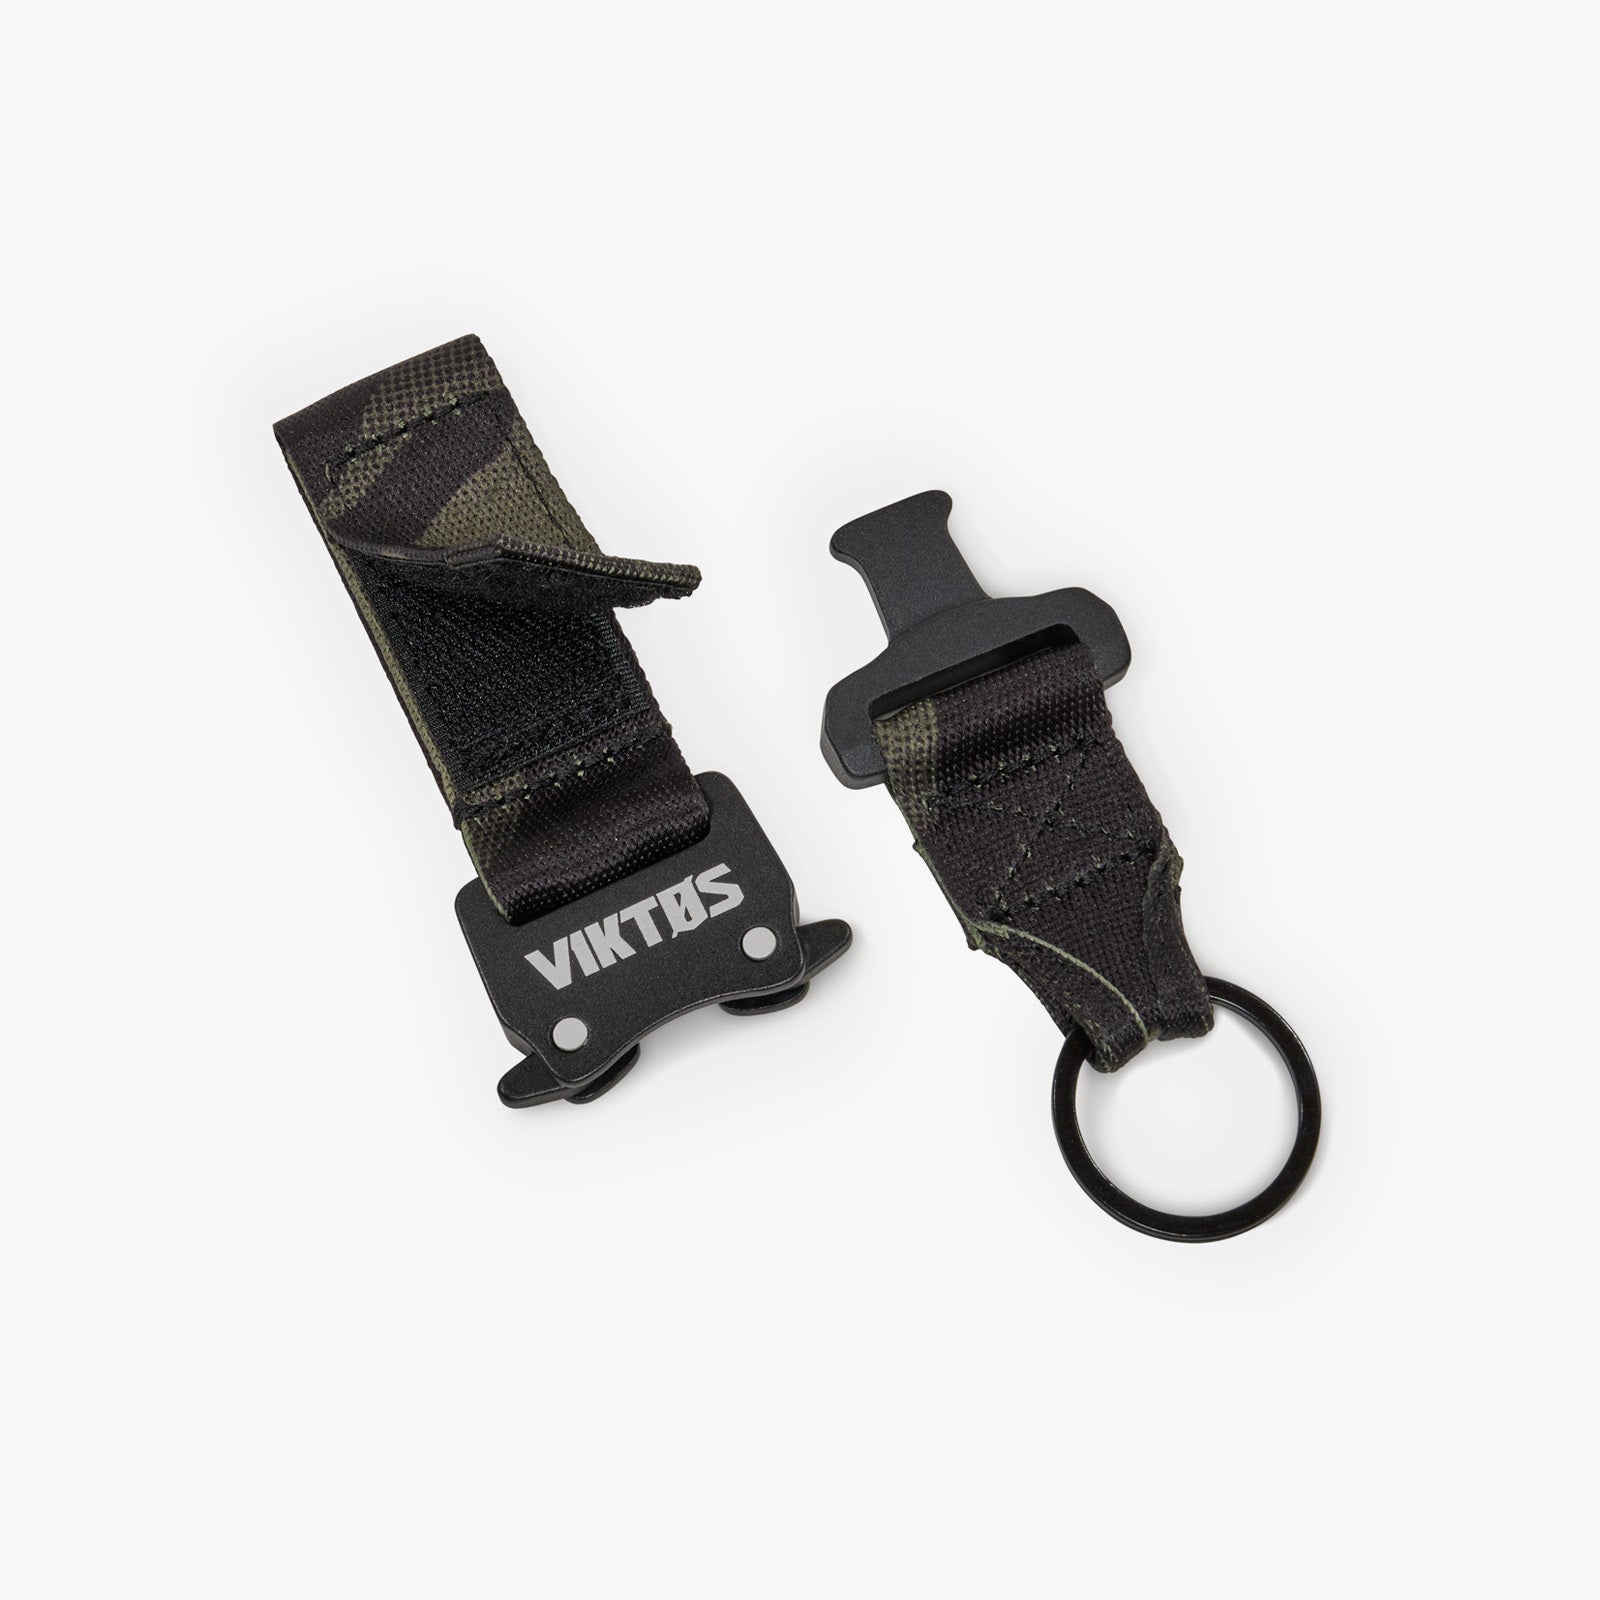 VIKTOS Bulldog Keychain Tactical Gear Australia Supplier Distributor Dealer